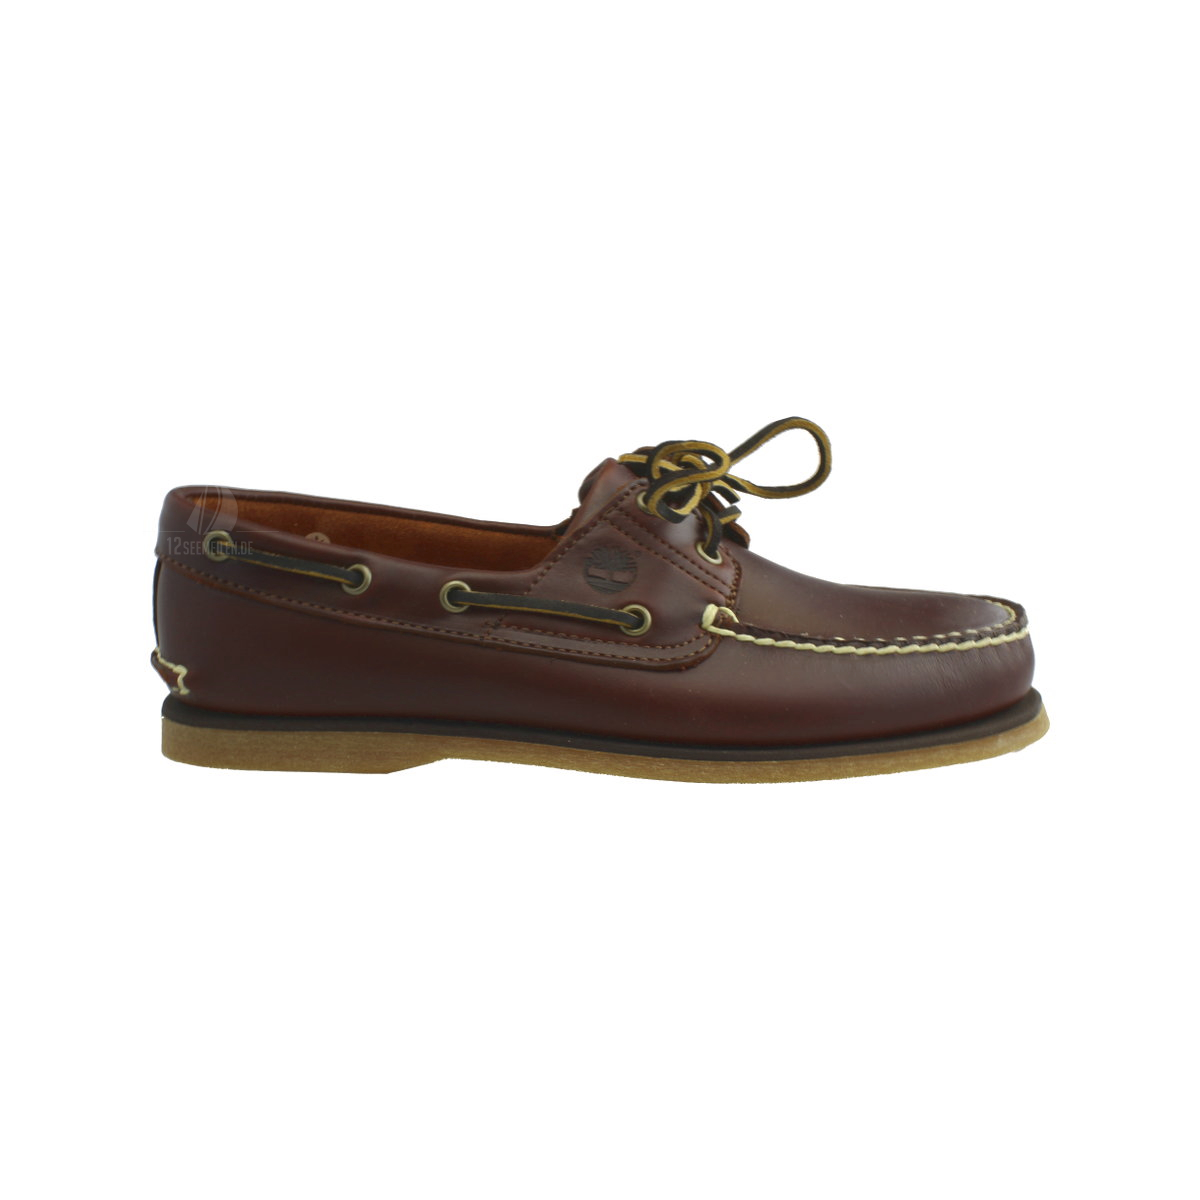 Timberland Classic Boat chaussures bateau Hommes brun - rouge eu 44 ( us 10 )